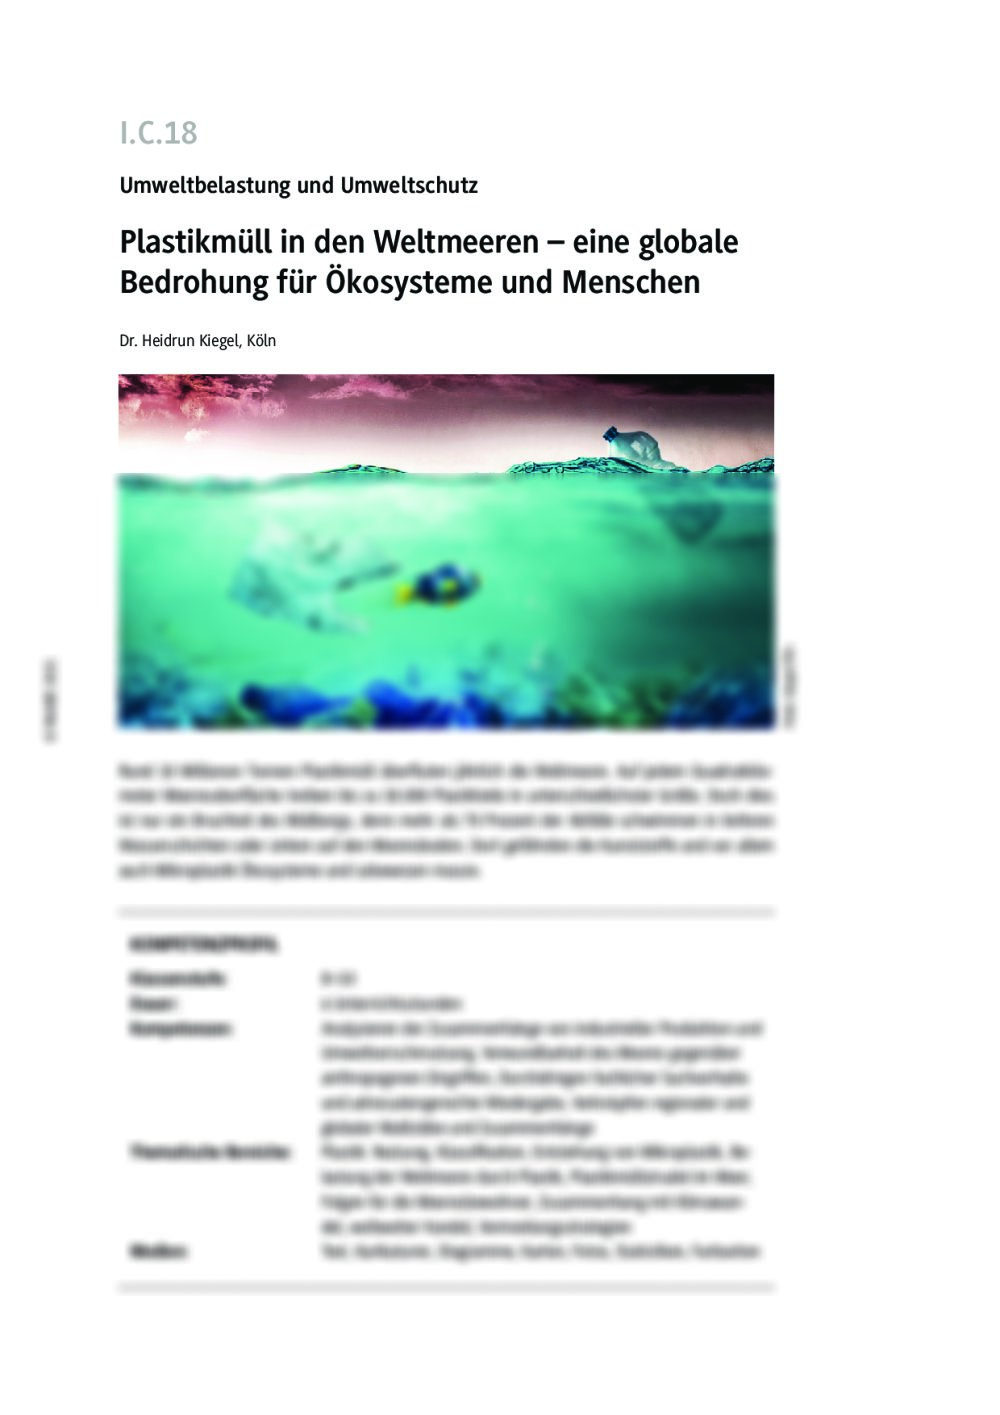 Plastikmüll in den Weltmeeren - Seite 1